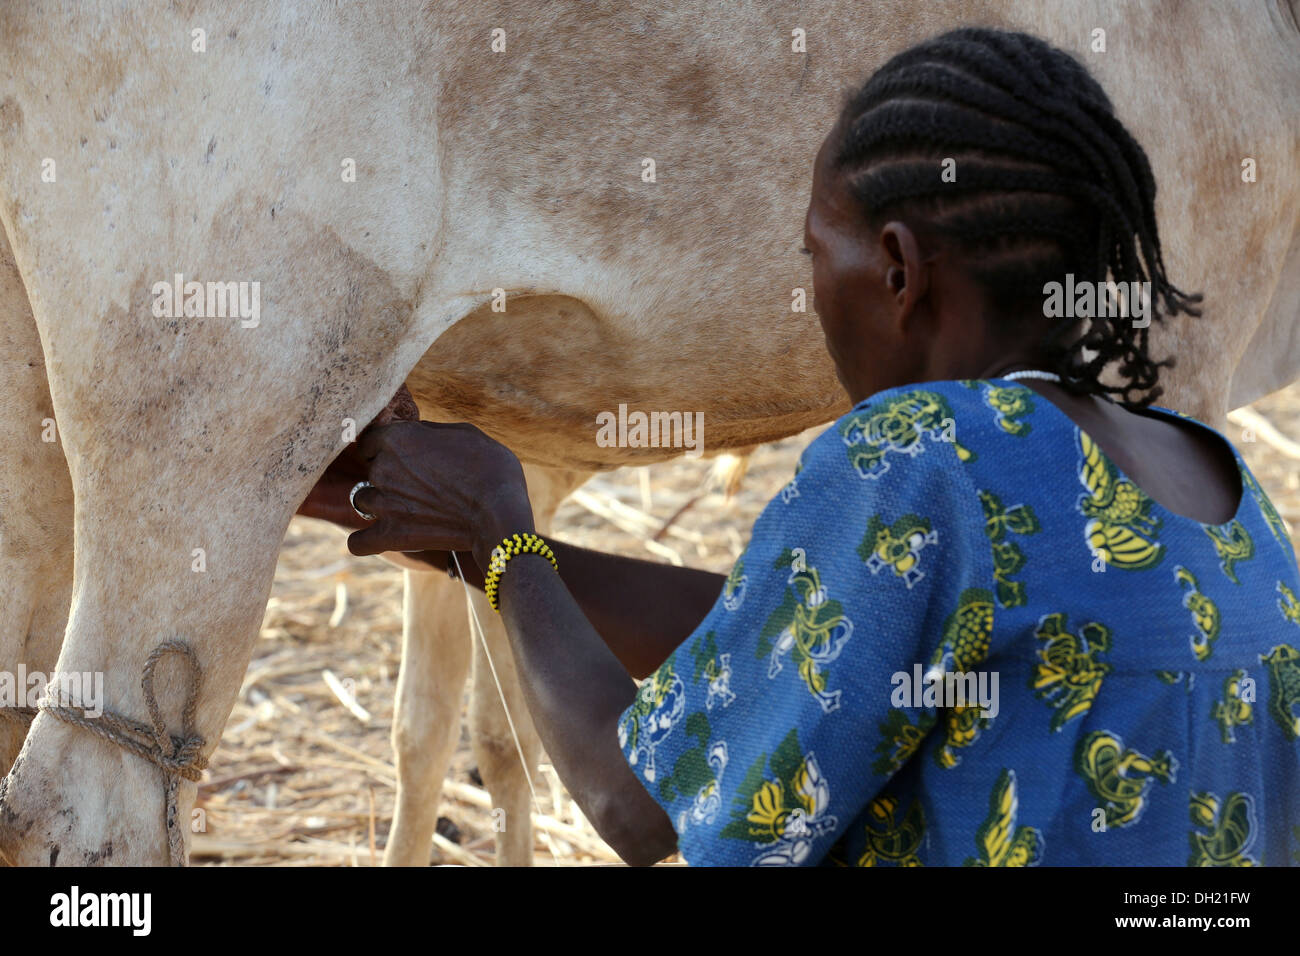 Frau im nördlichen Burkina Faso Kuh zu melken Stockfoto